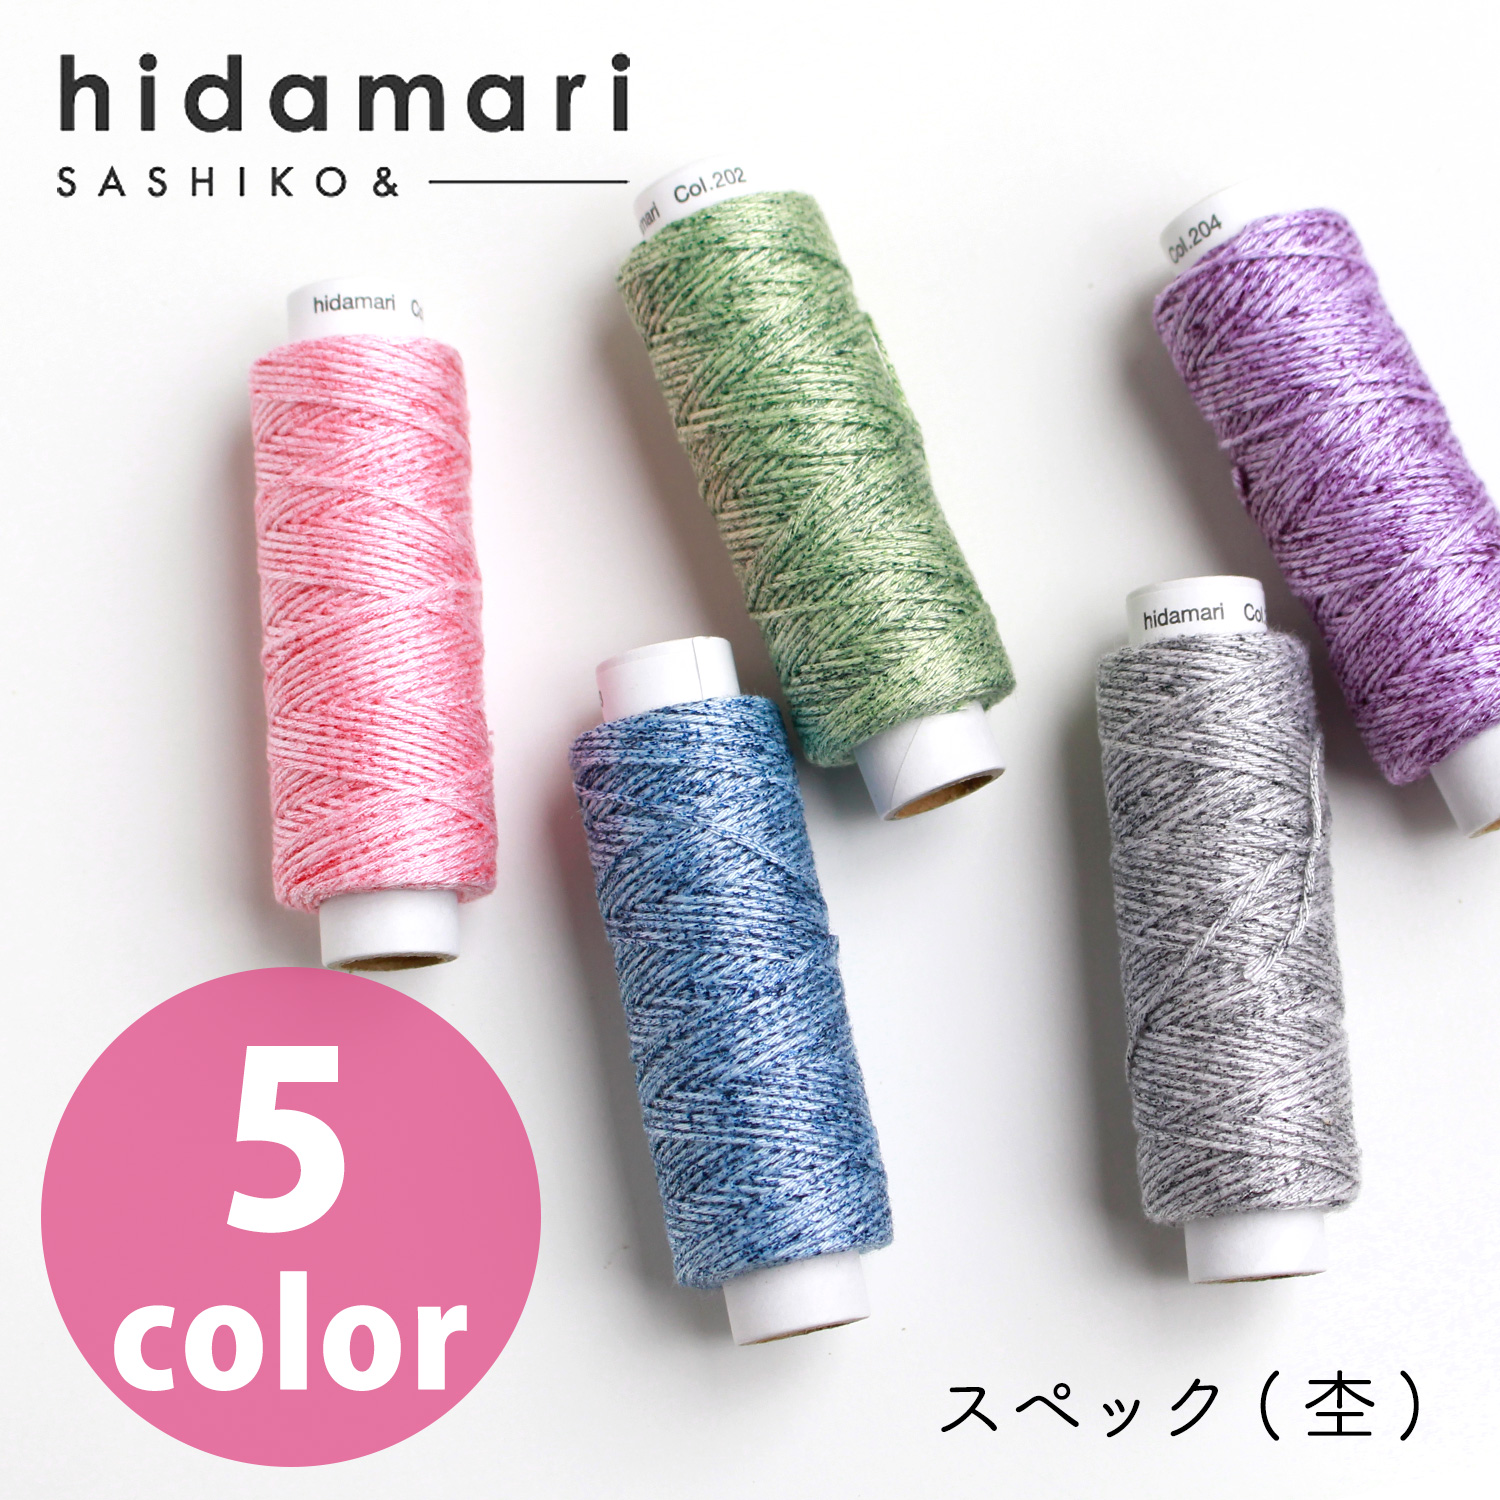 【renewal】CS122302-201~205 Cosmo Sashiko Thread (Textured) - hidamari - (pcs)